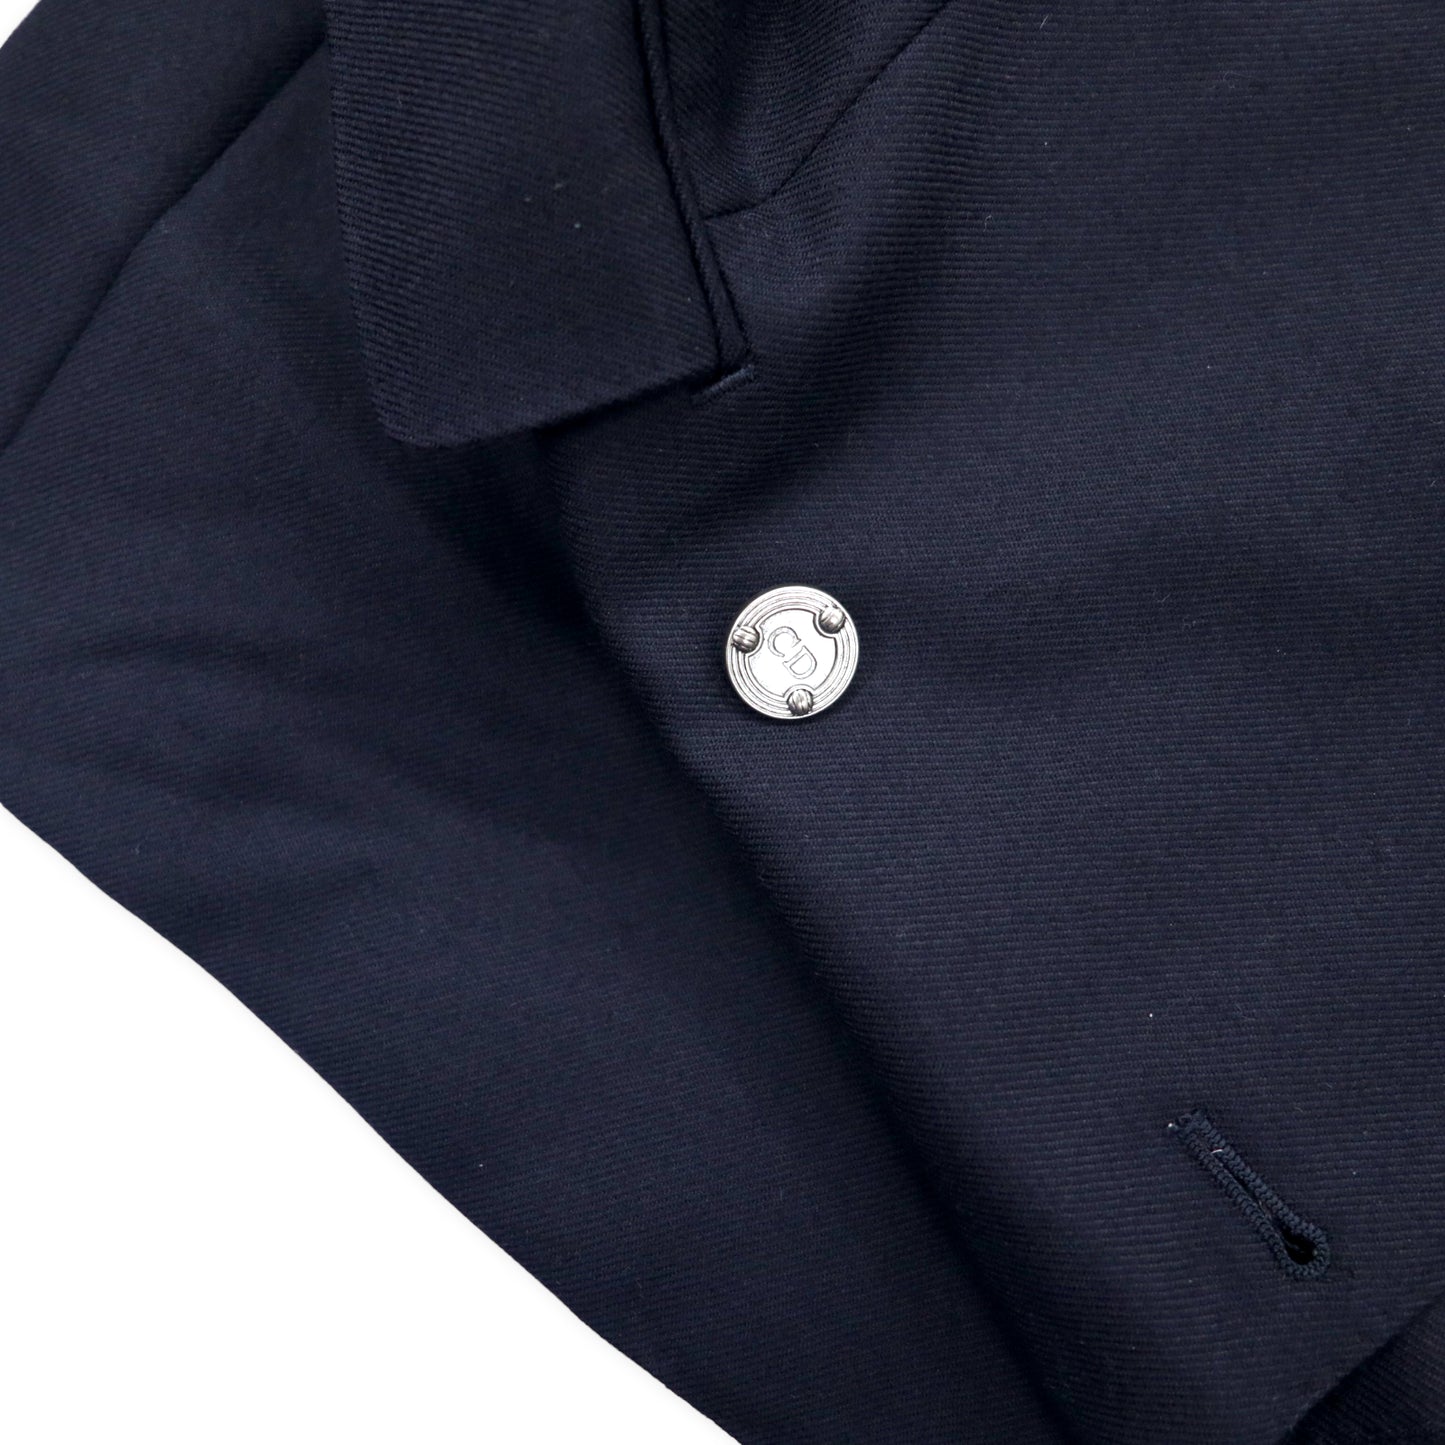 Christian Dior MONSIEUR ダブル テーラードジャケット 紺ブレ 170 ネイビー ウール ギャバジン 飾りボタン オールド 日本製